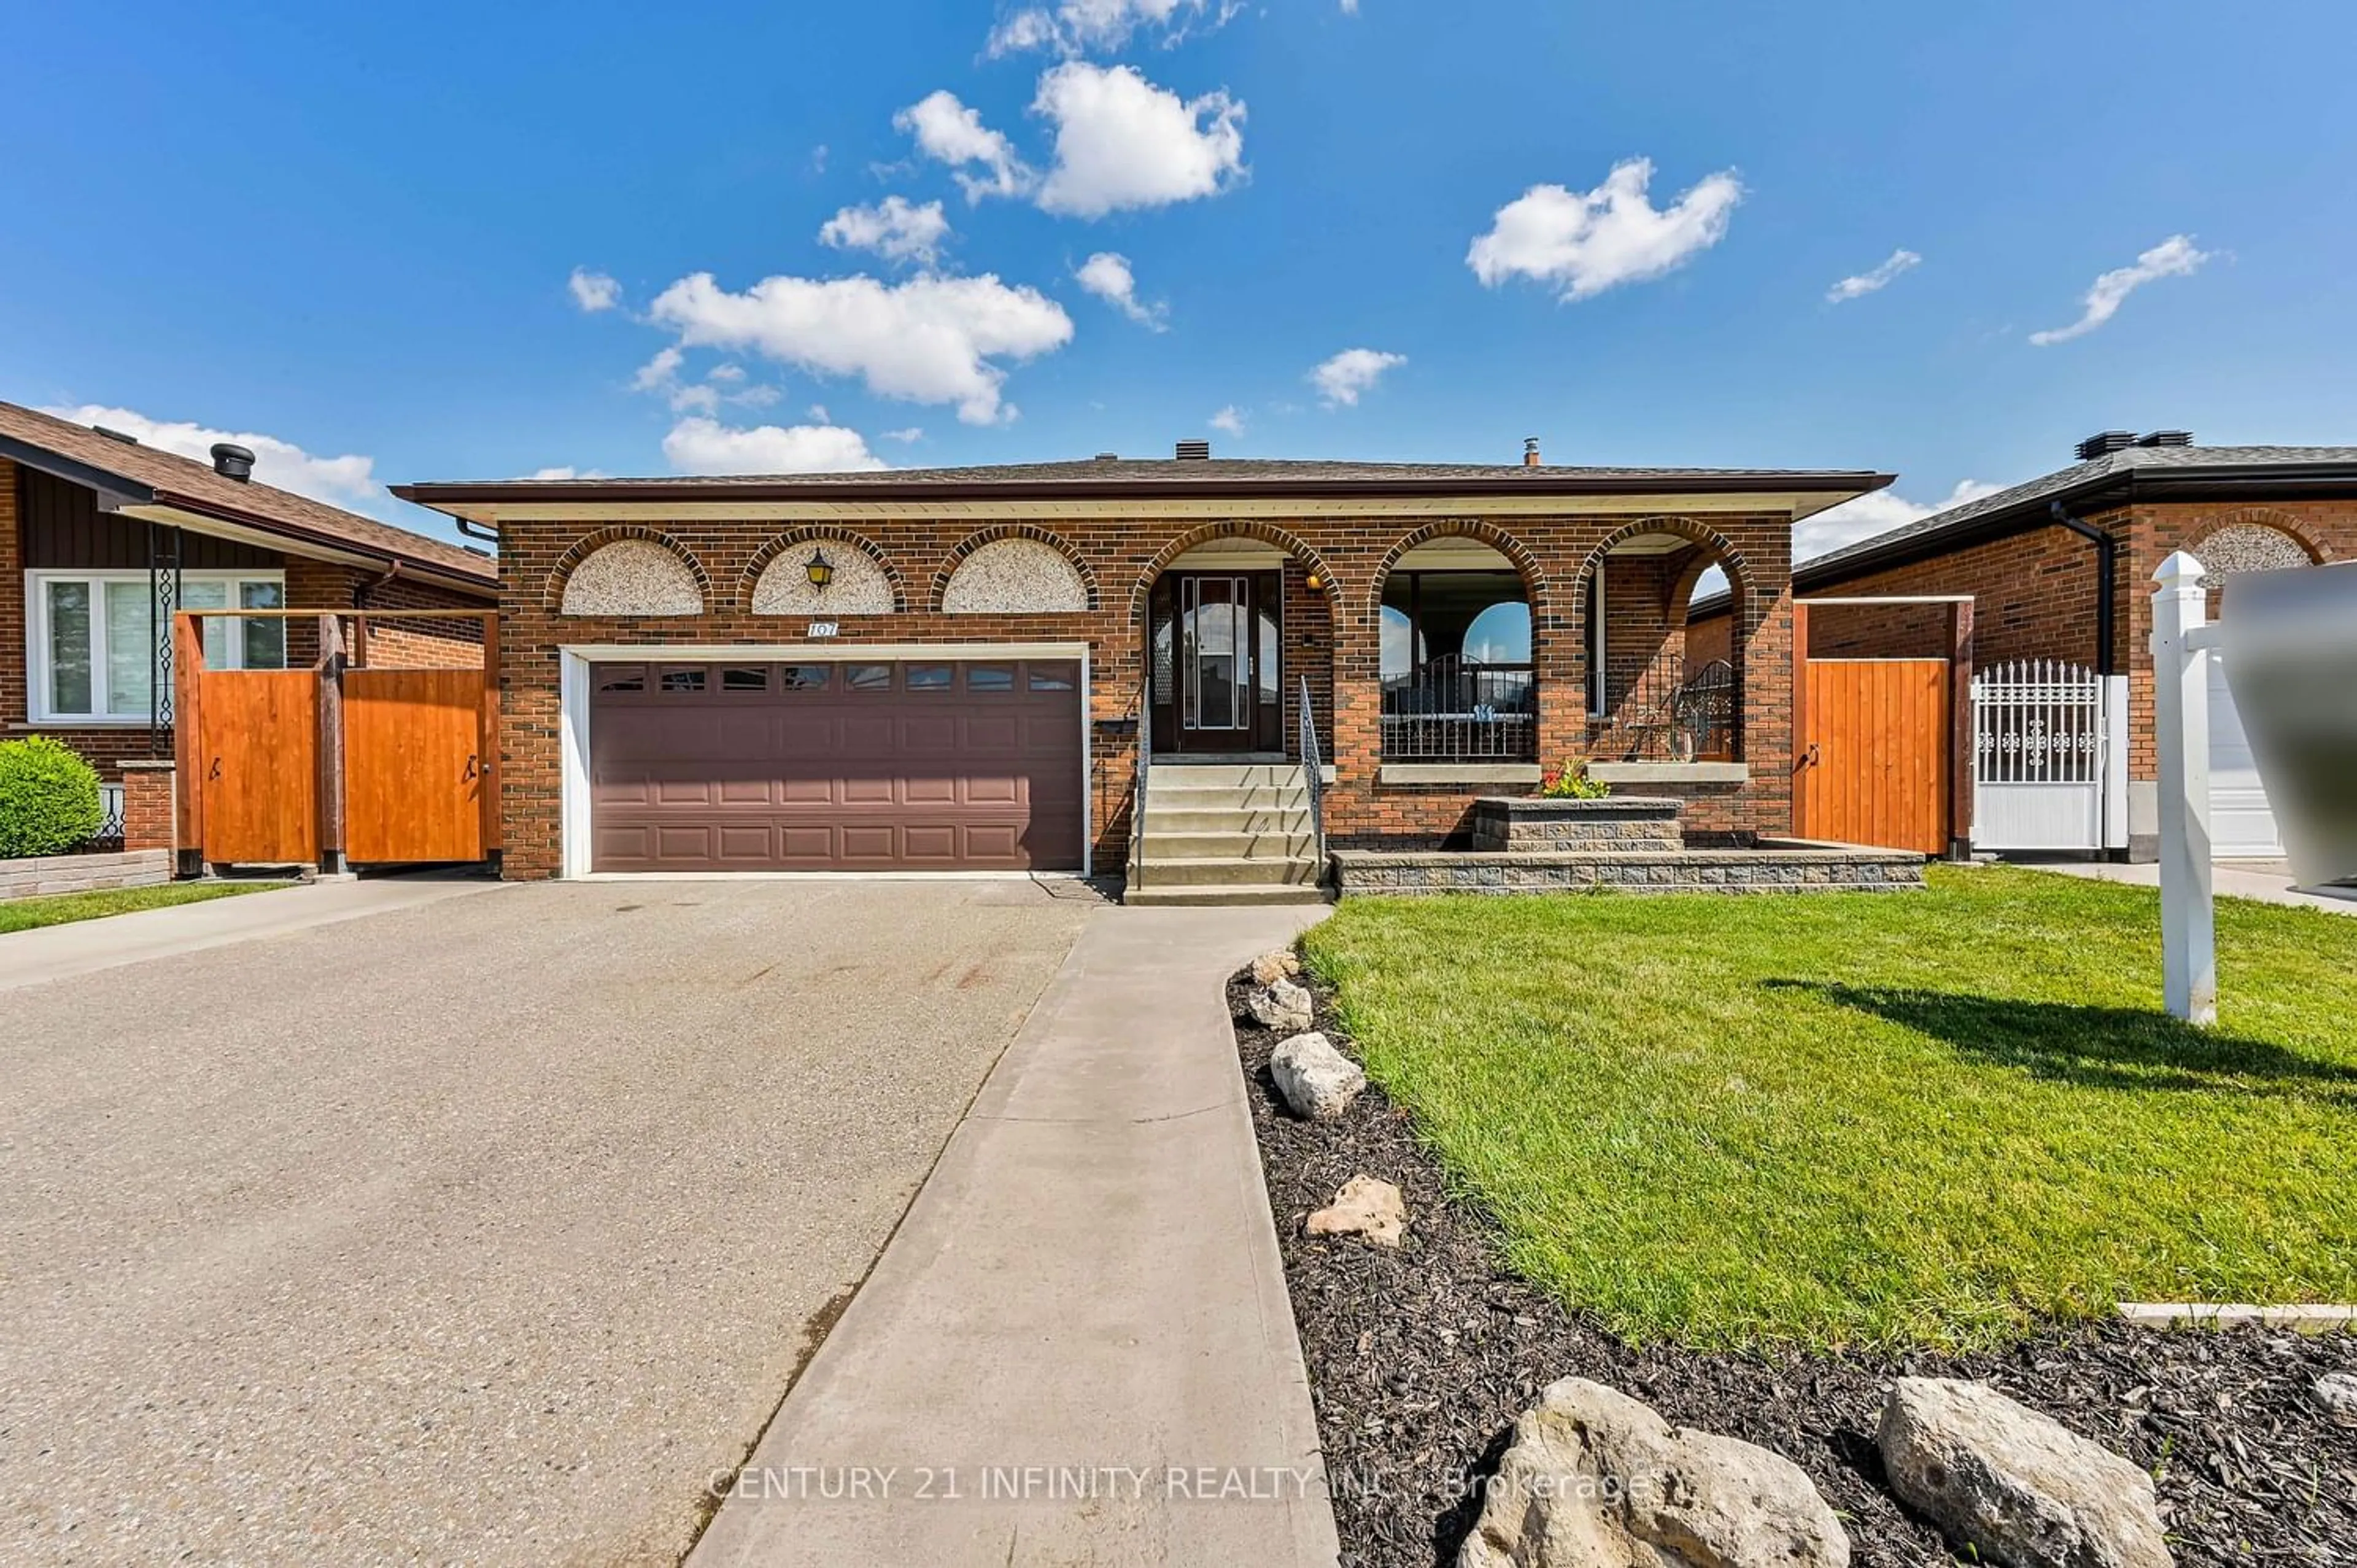 Home with brick exterior material for 107 Linkdale Rd, Brampton Ontario L6V 2V4